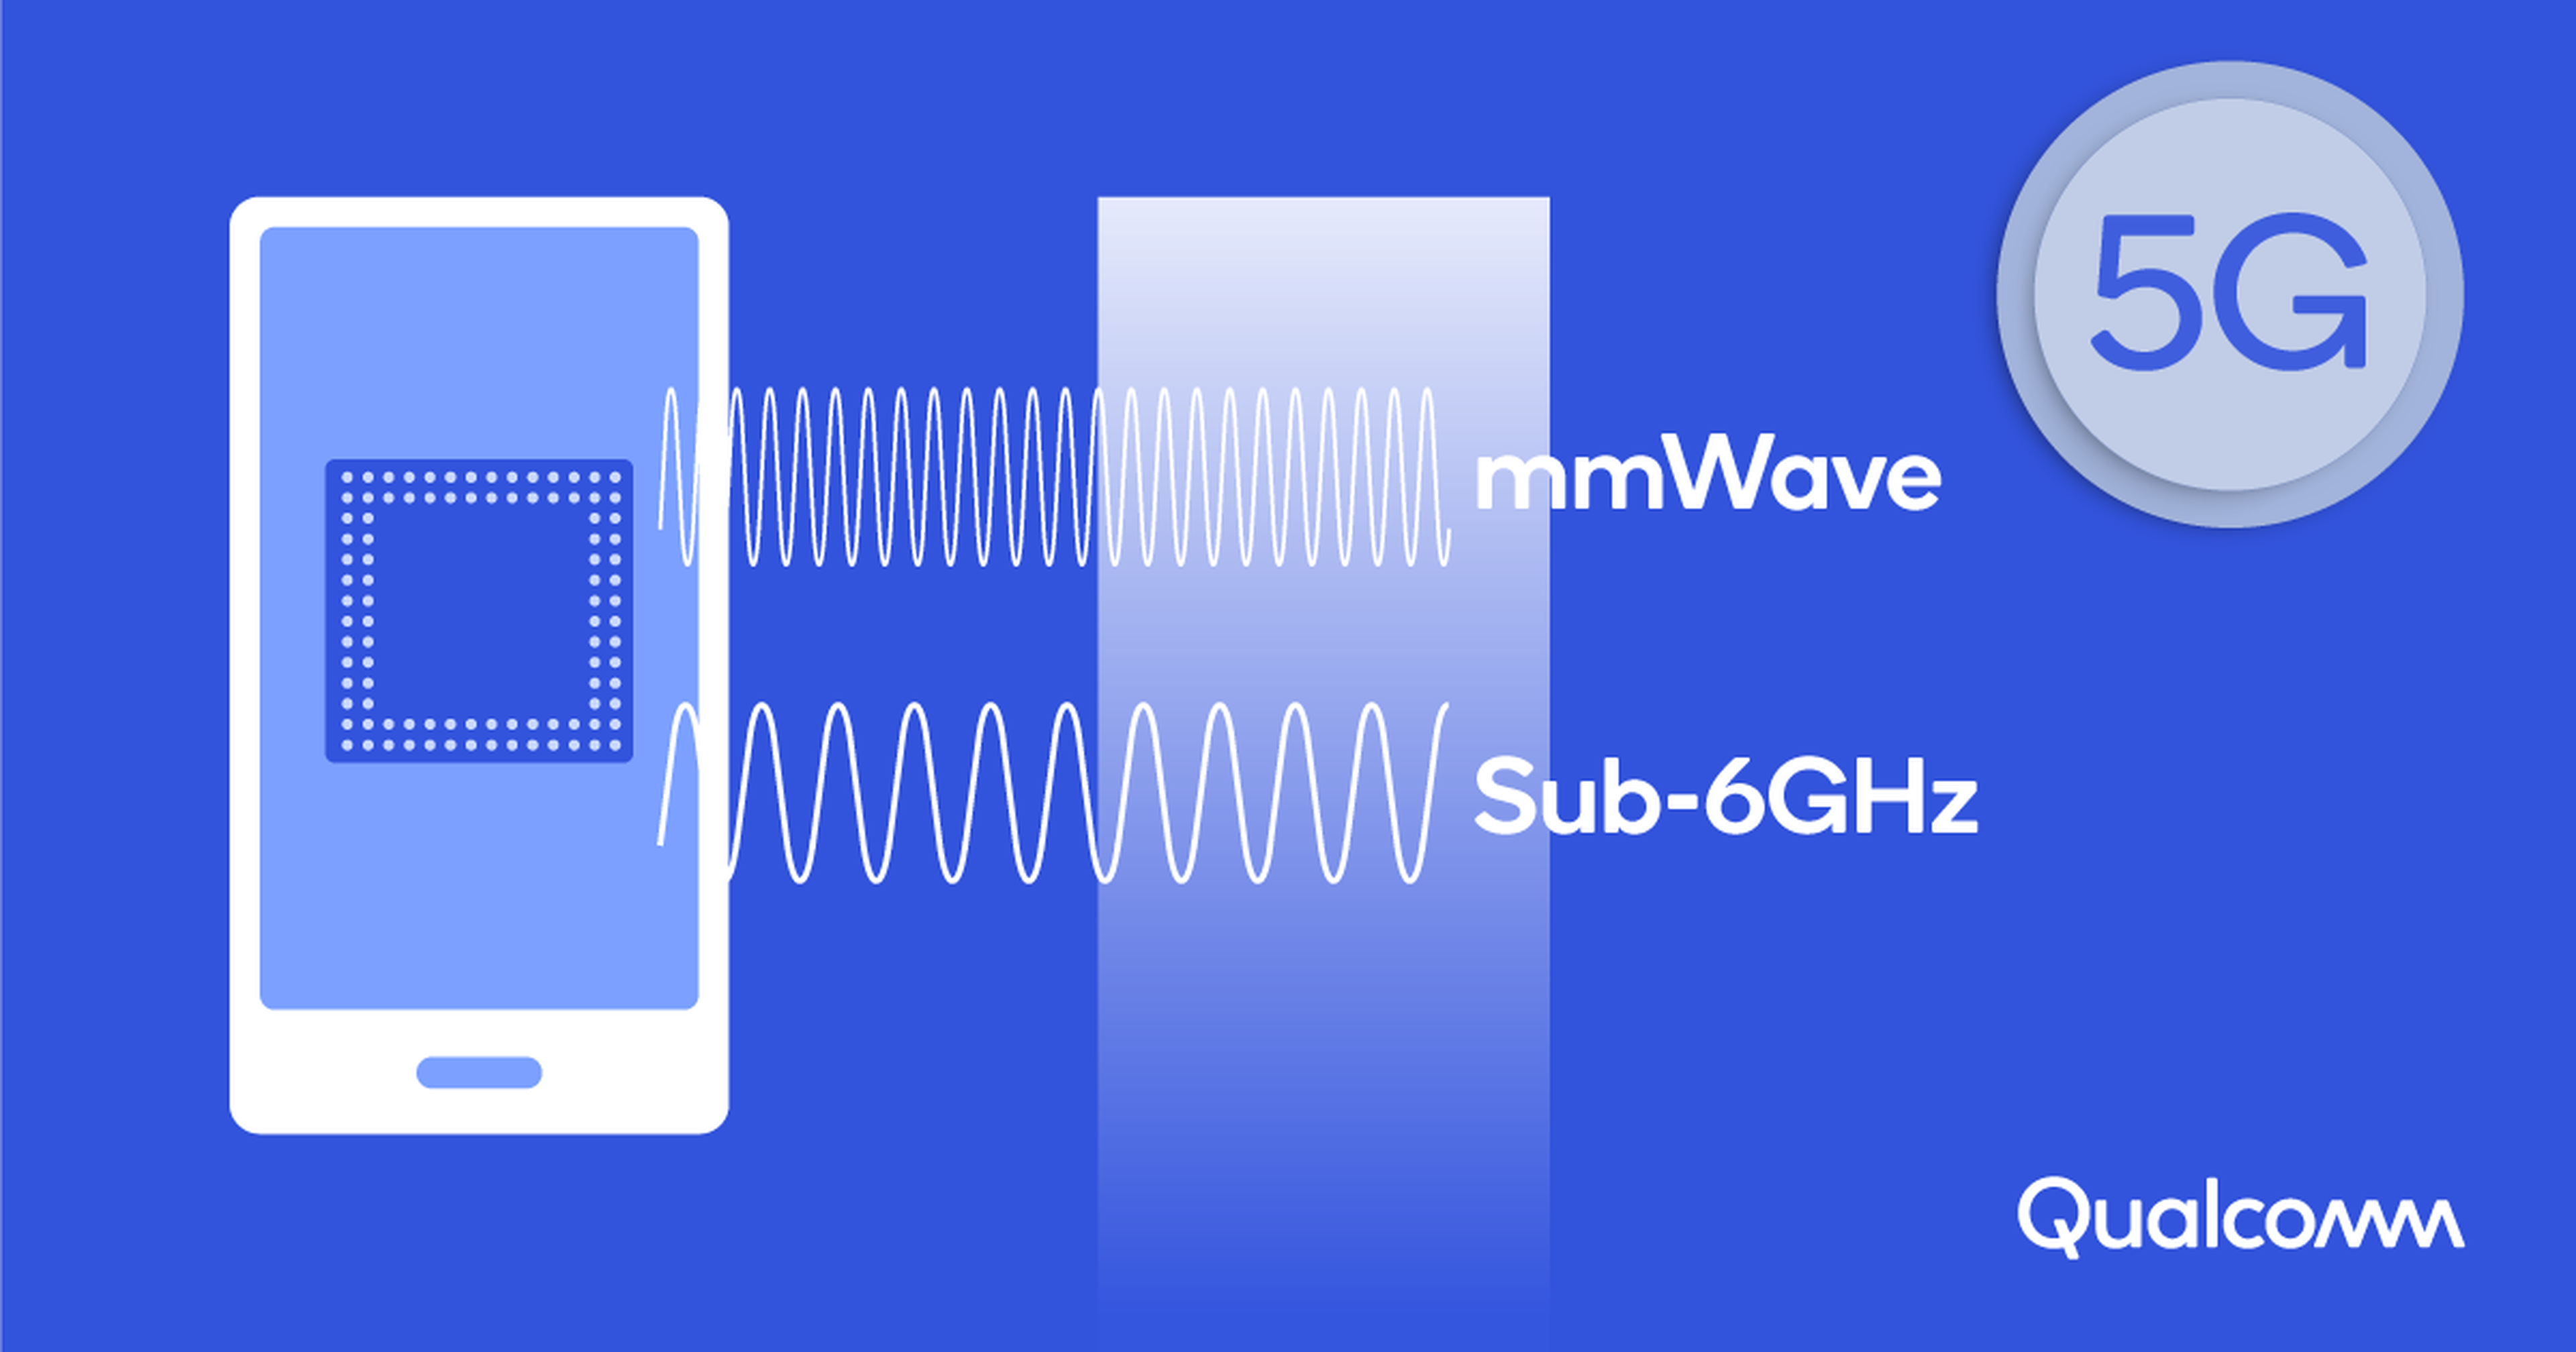 5G Qualcomm mmwave